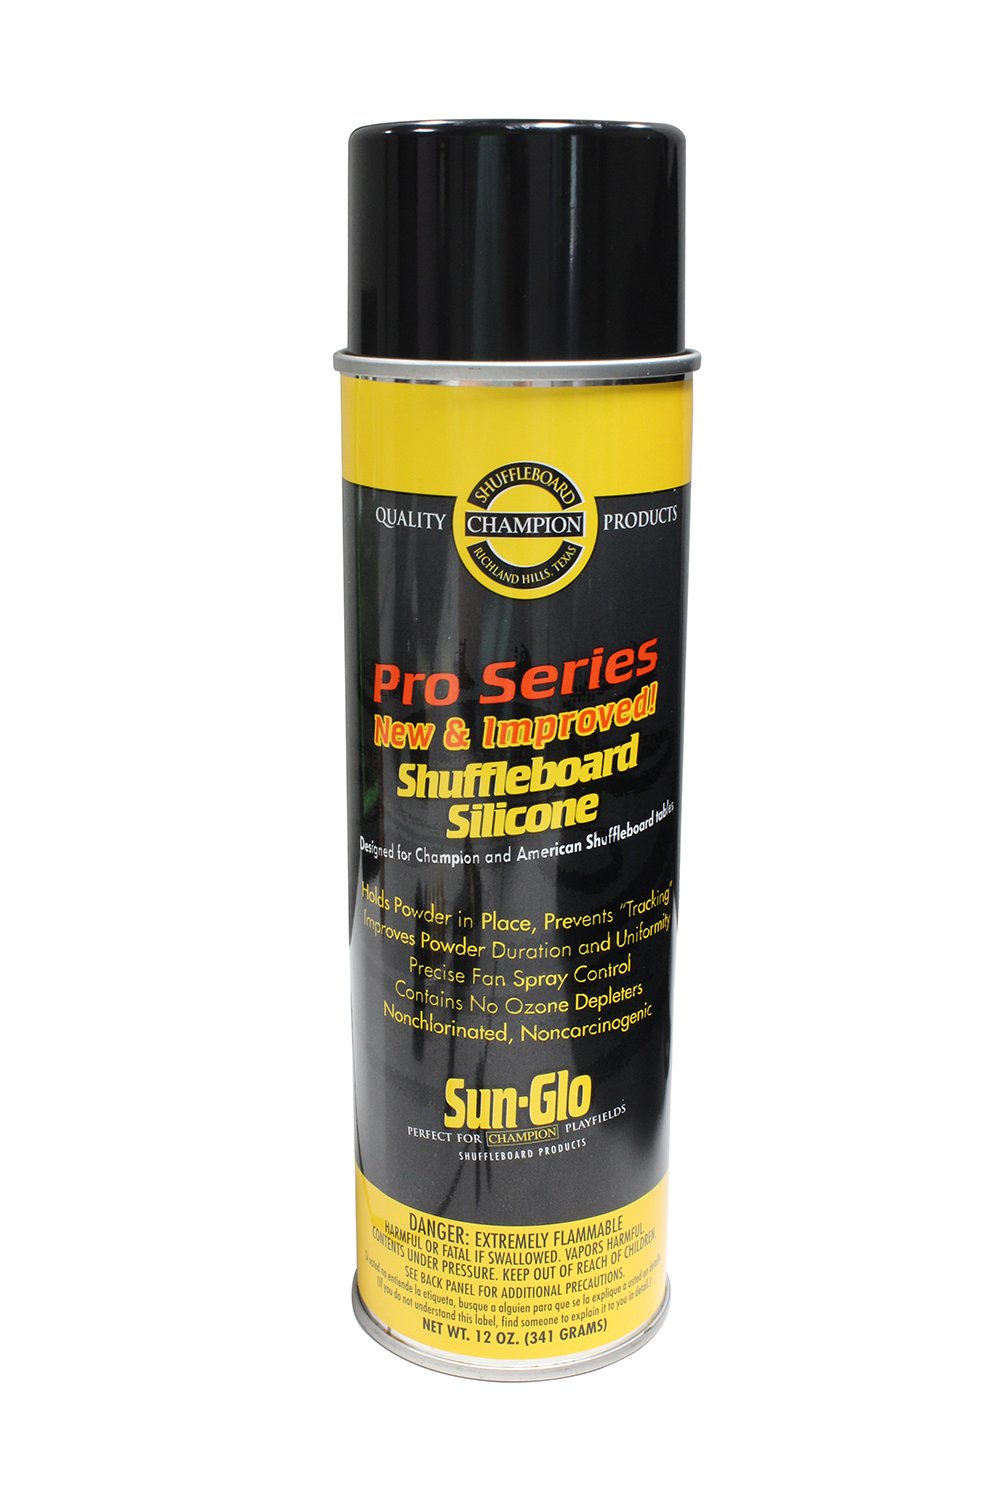 Sun-Glo Silicone Shuffleboard Spray (12 oz.)